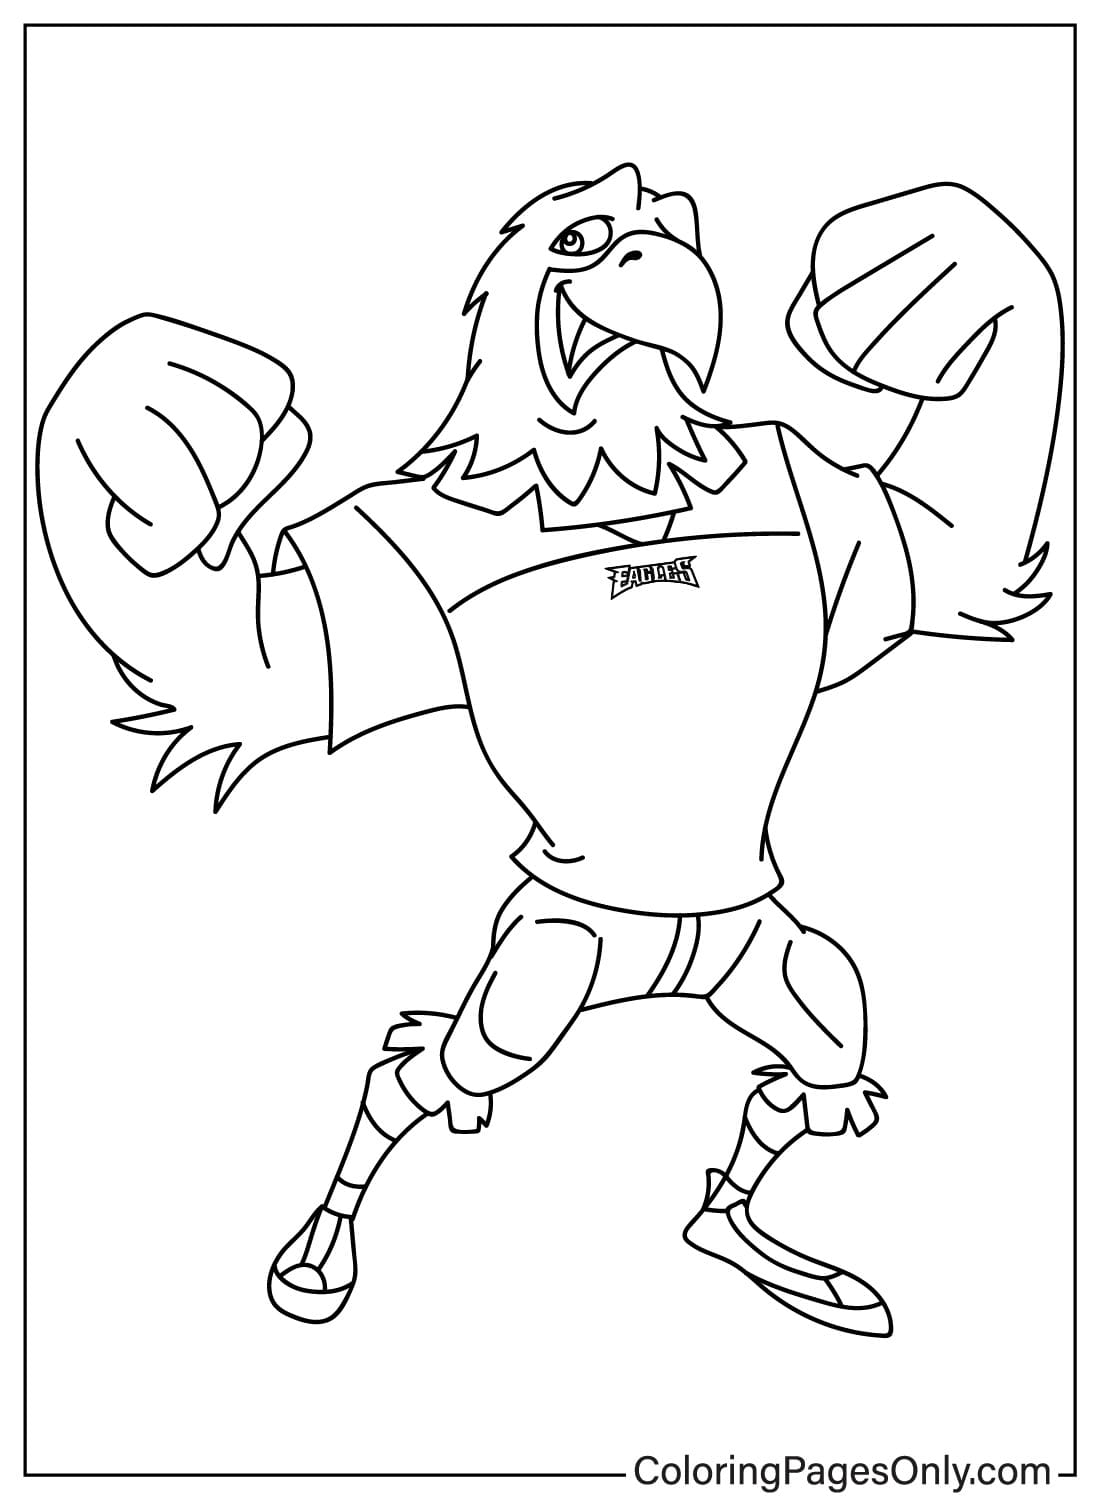 Página para colorear de mascota Swoop gratis de Philadelphia Eagles